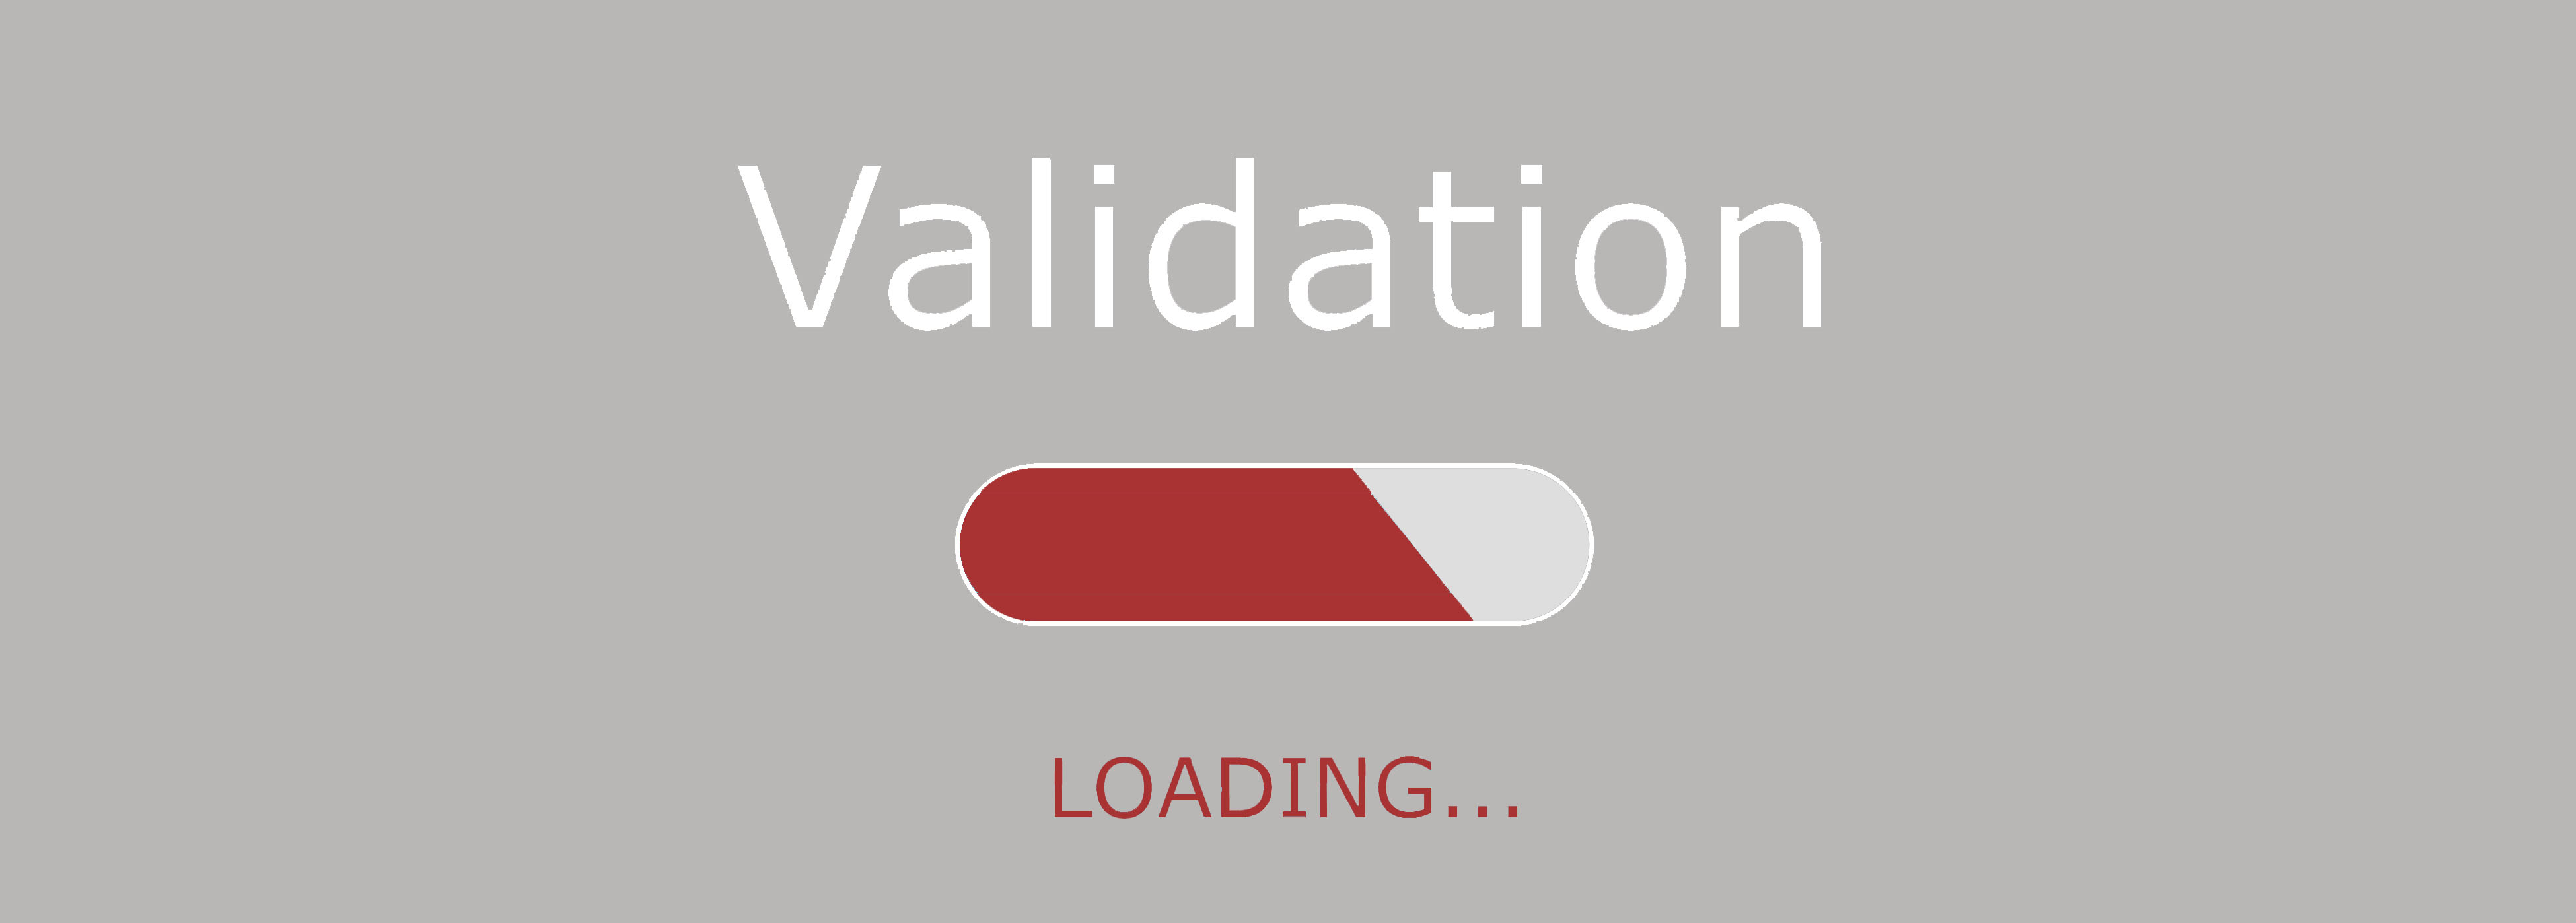 blog - validation2